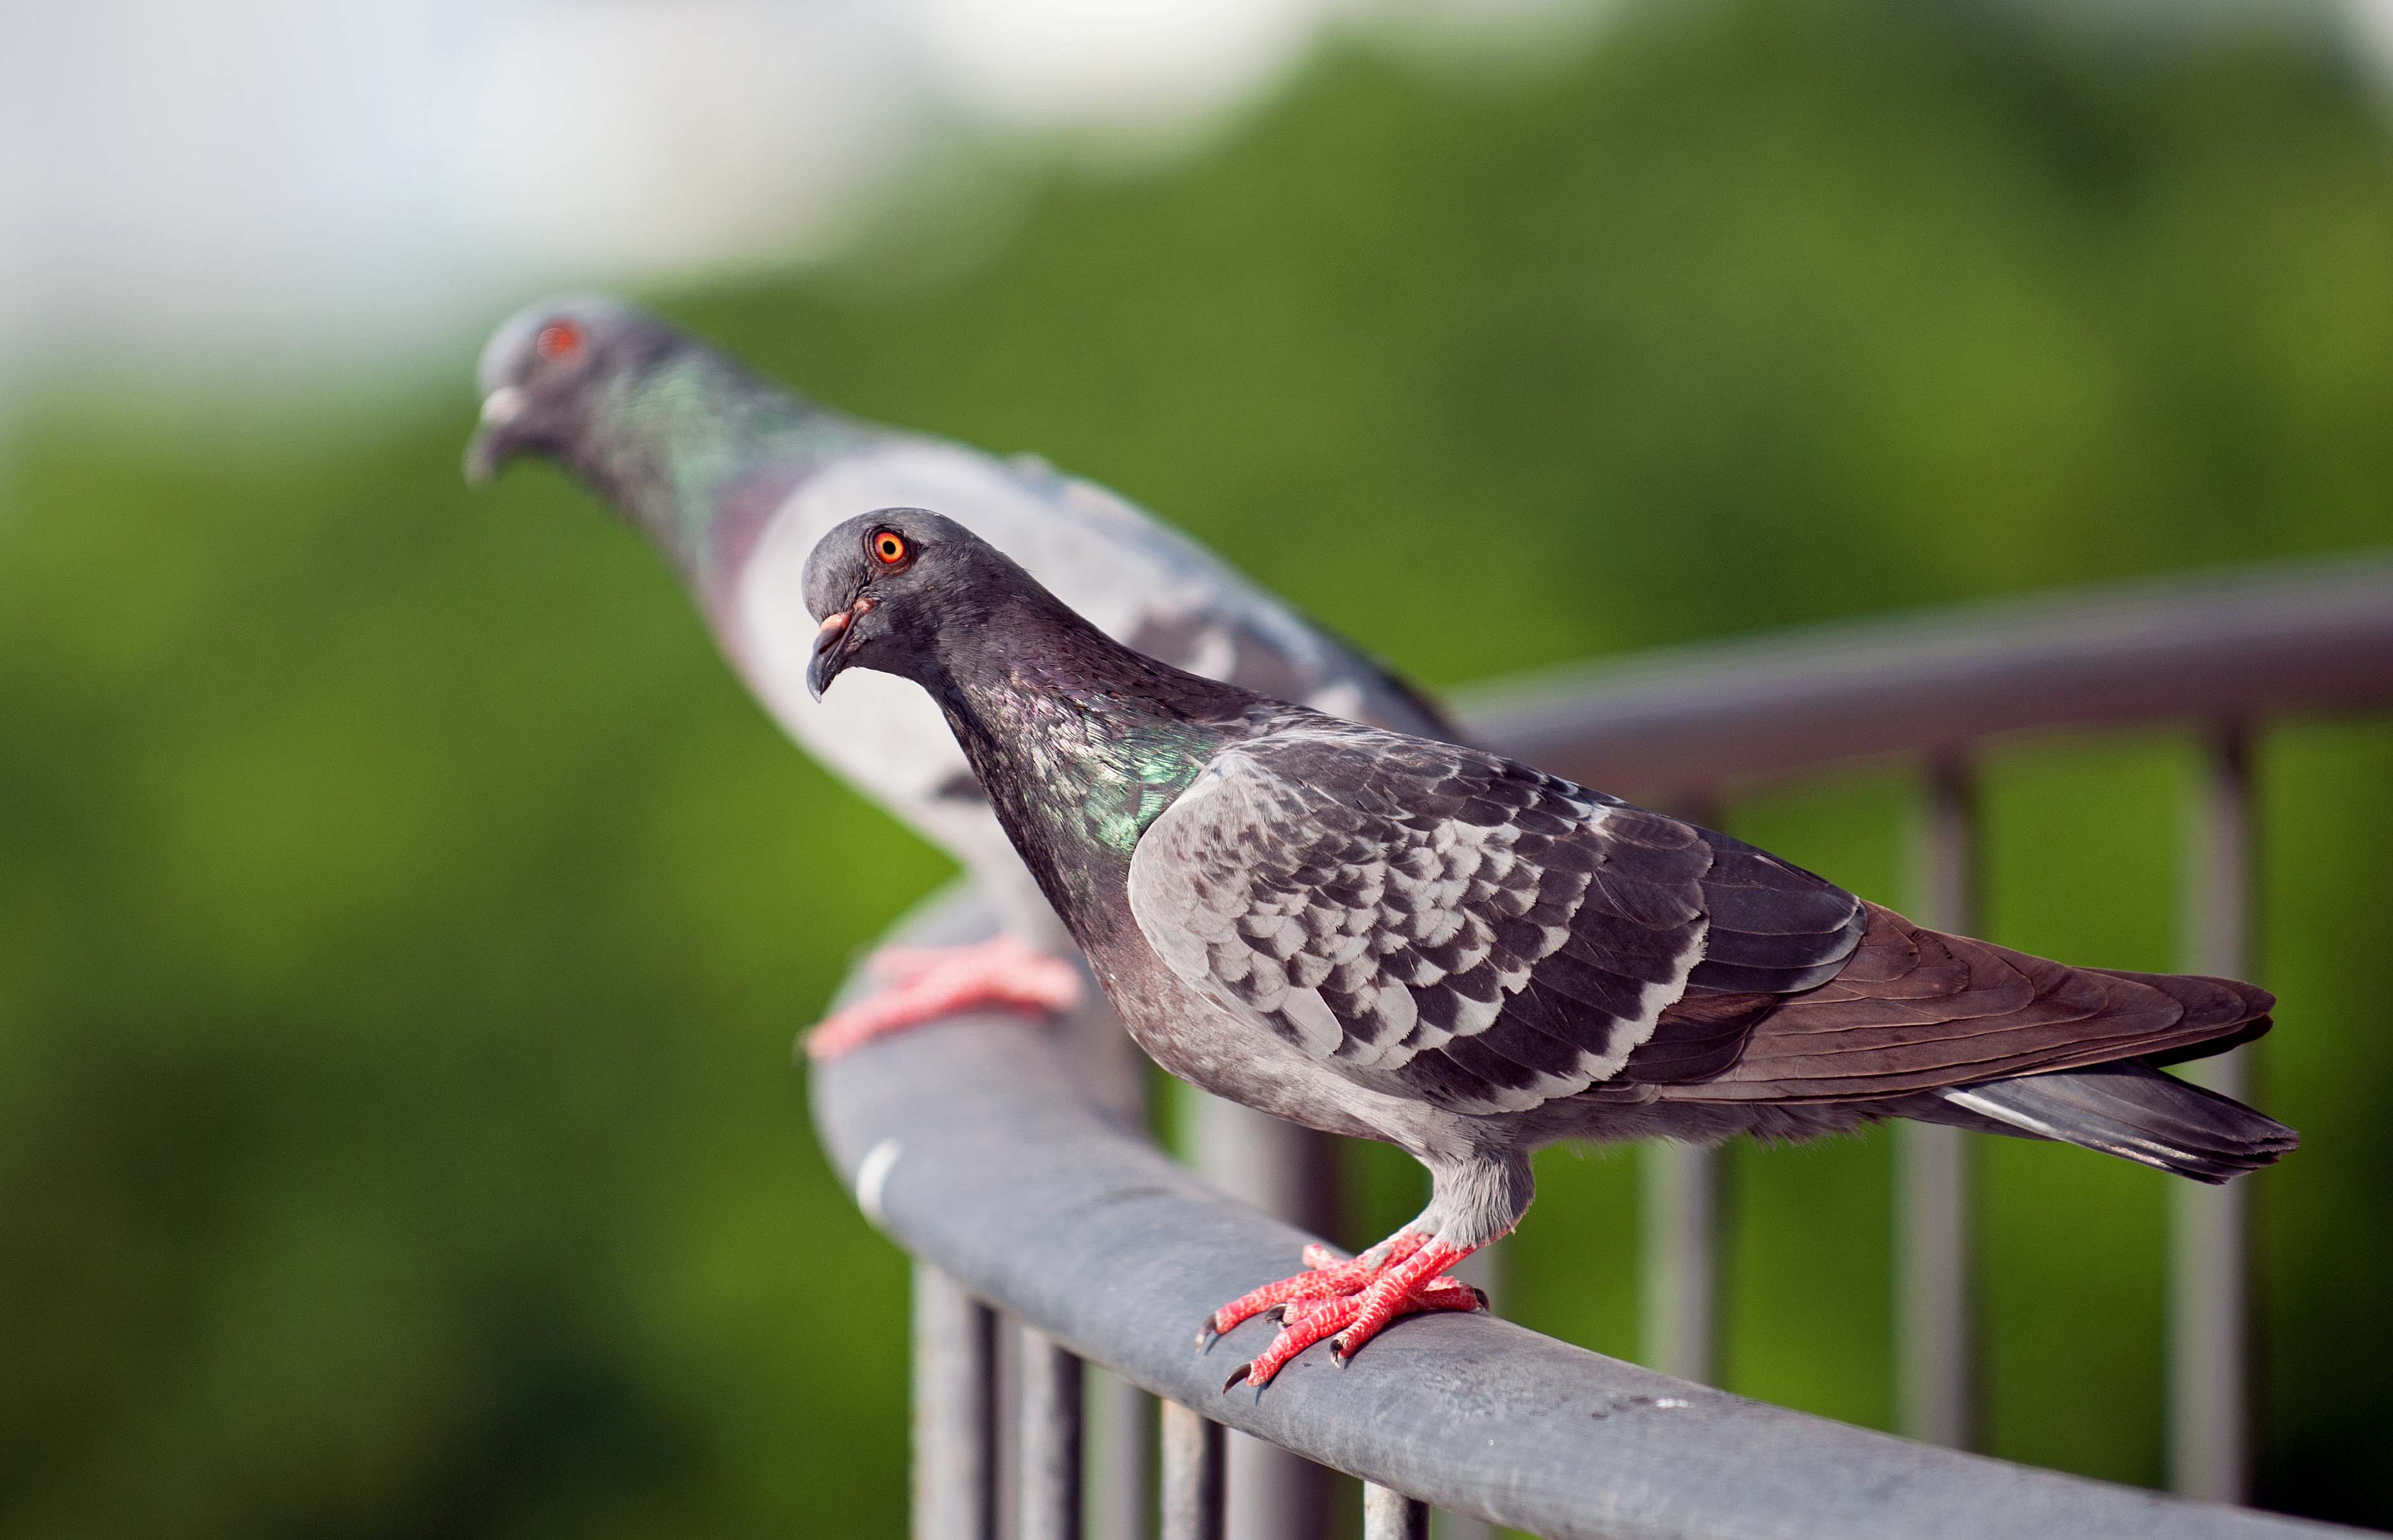 Urban pigeon photo